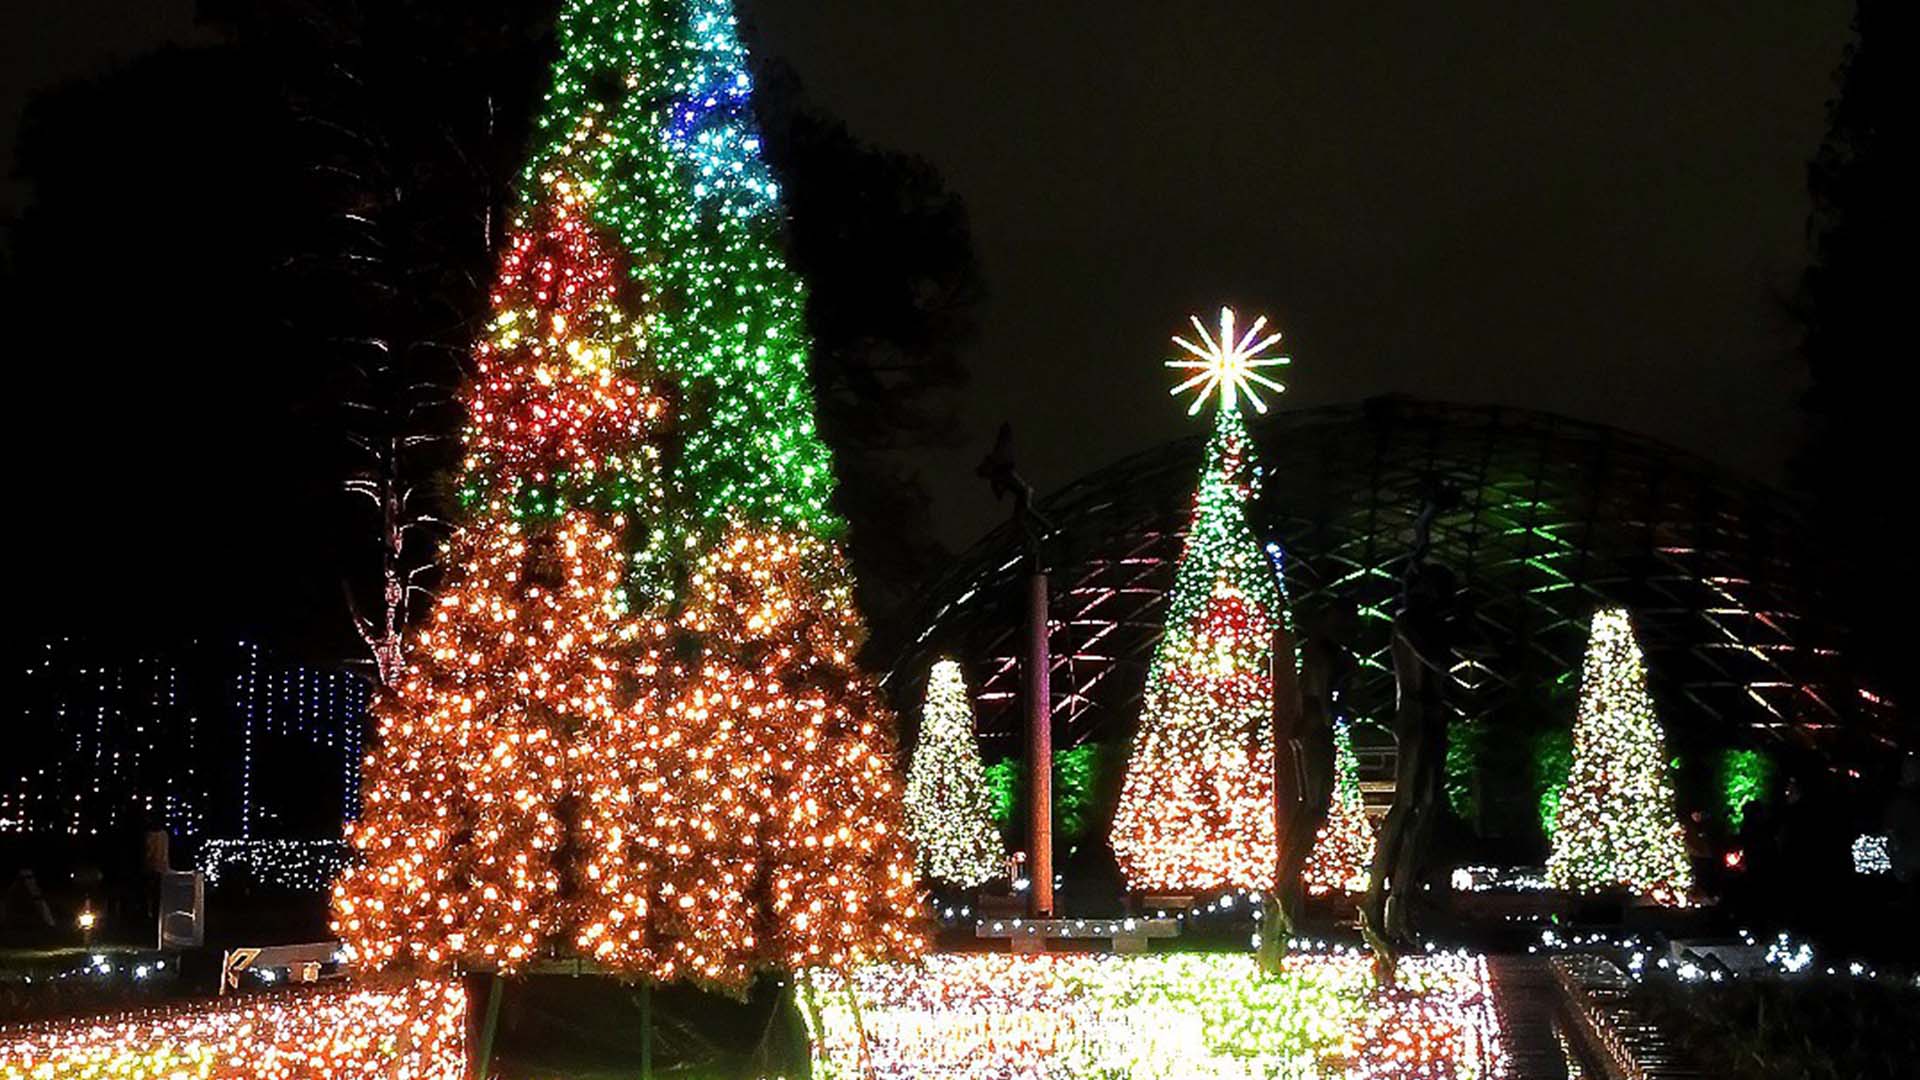 Missouri Botanical Garden's Holiday lights